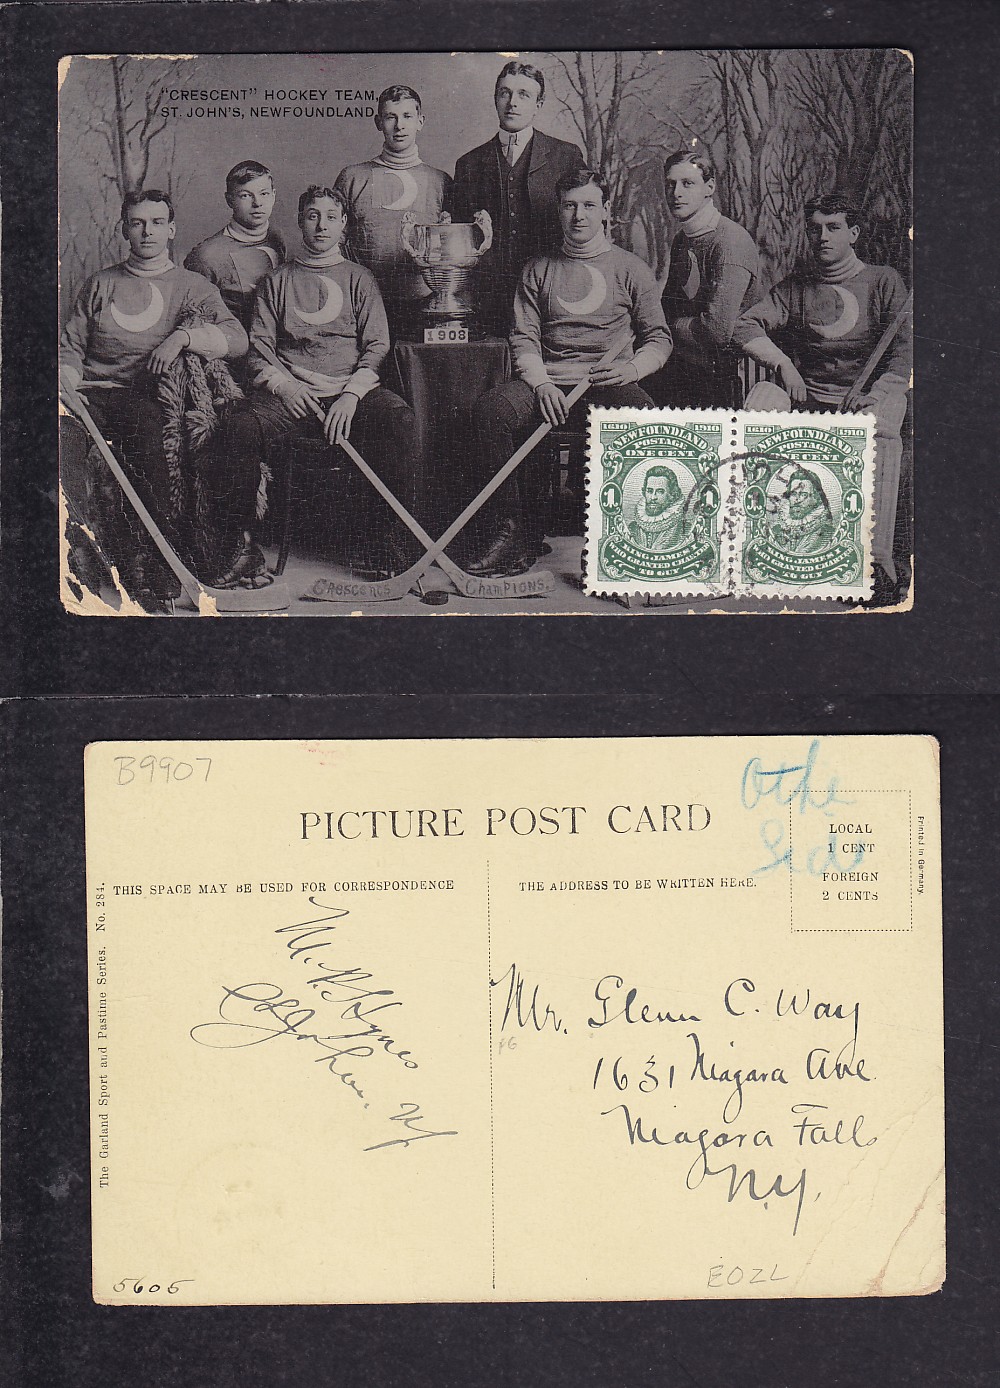 1908 ST-JOHN'S CRESCENT HOCKEY TEAM POST CARD photo